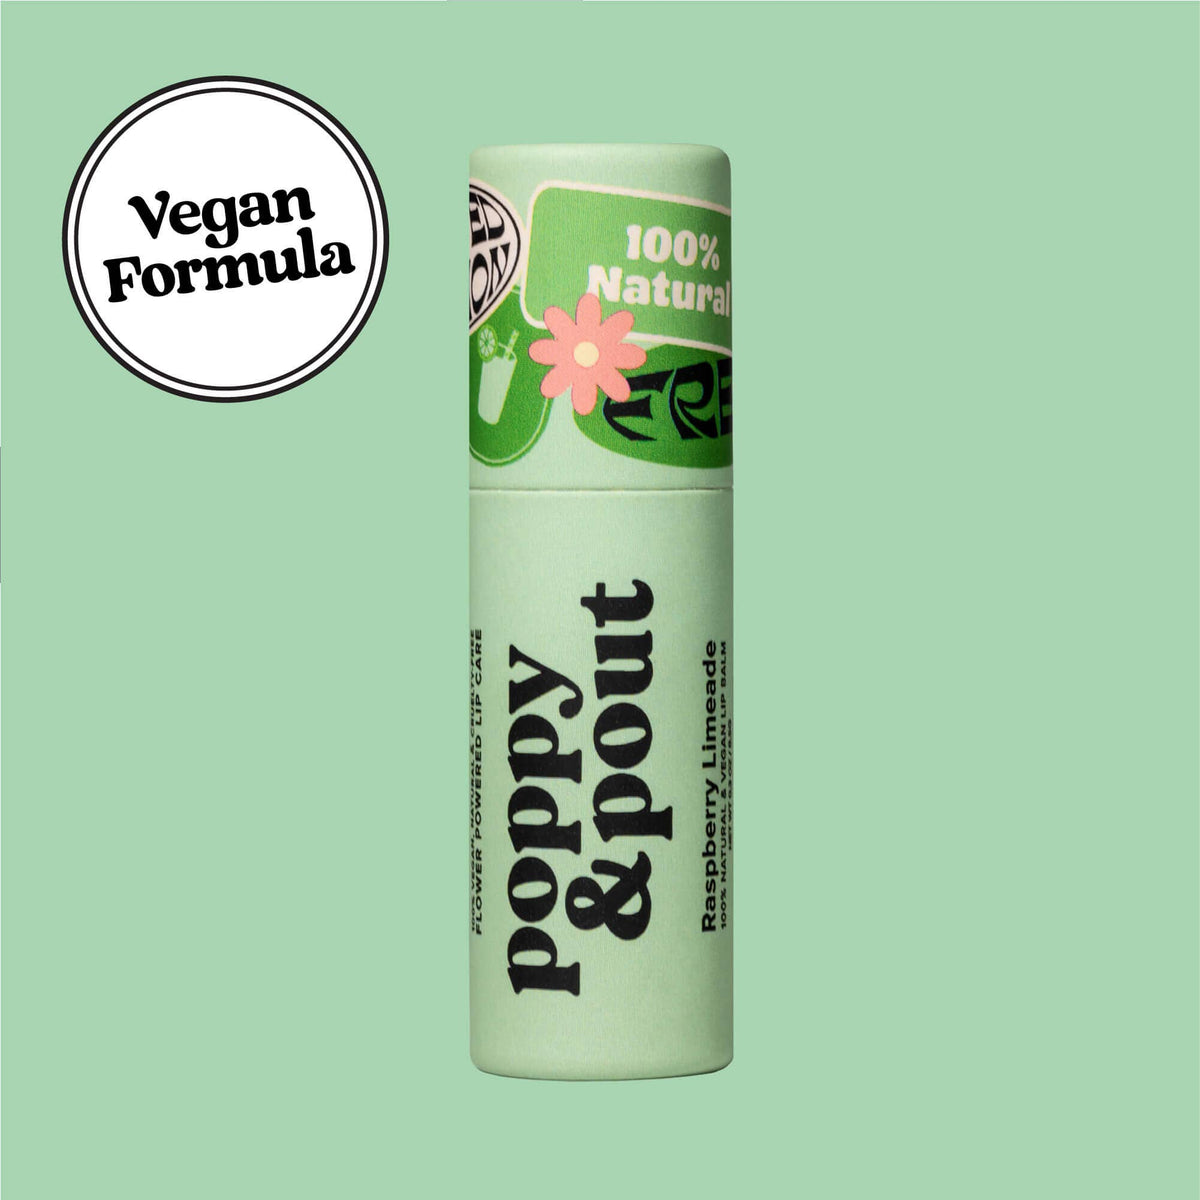 Poppy & Pout - Vegan Lip Balm "Sunny Daze" Raspberry Limeade